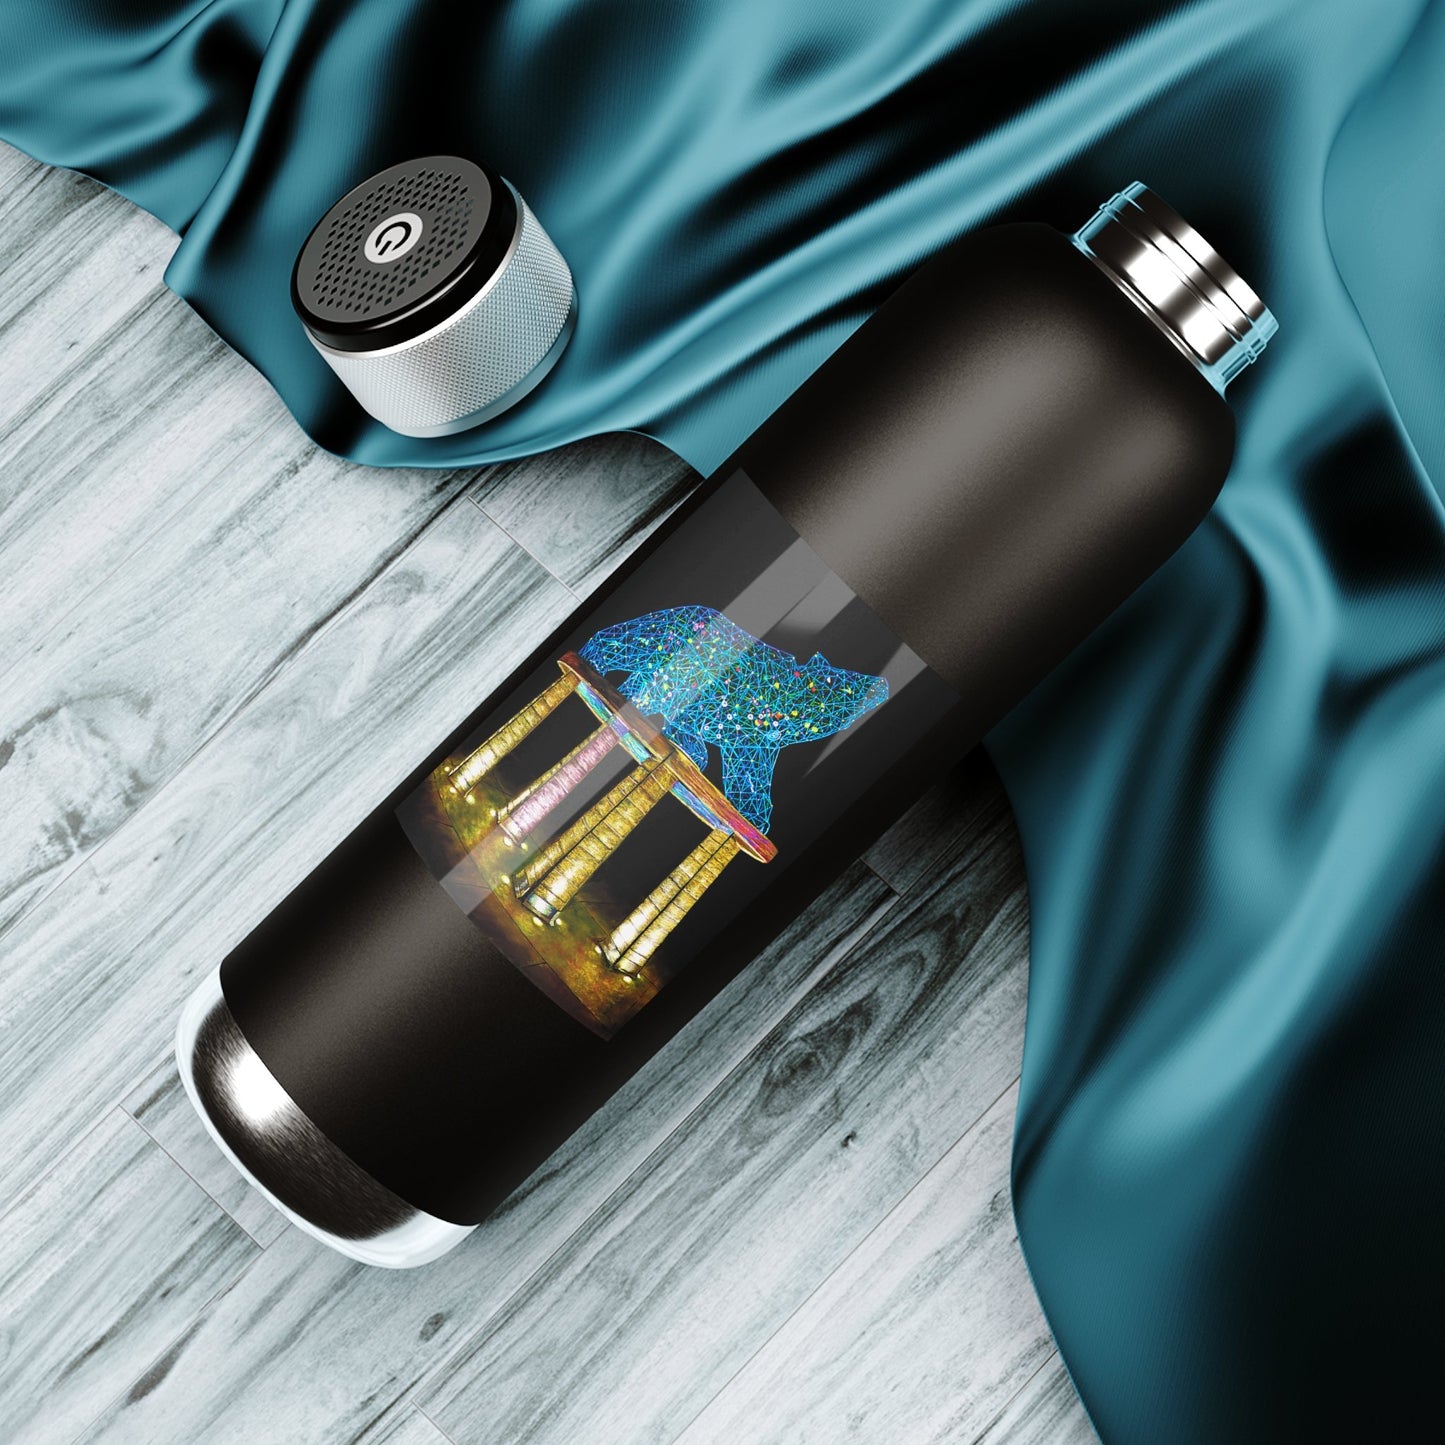 "Bear" Copper Insulated Bluetooth Water Bottle 22oz | Audio Speaker Lid